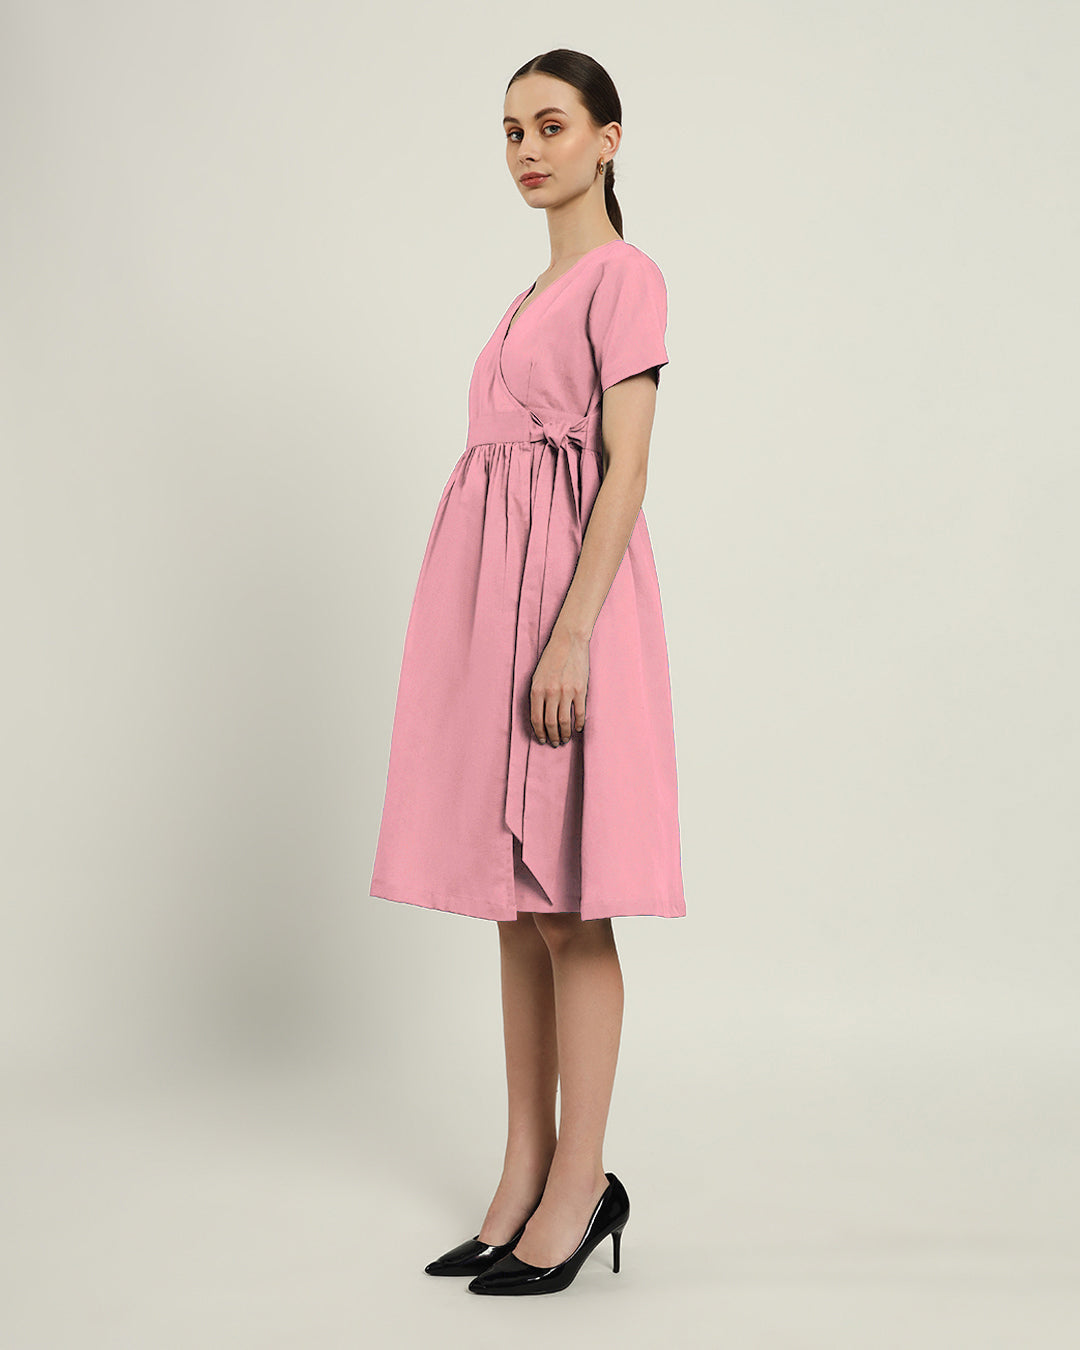 The Miyoshi Fondant Pink Cotton Dress